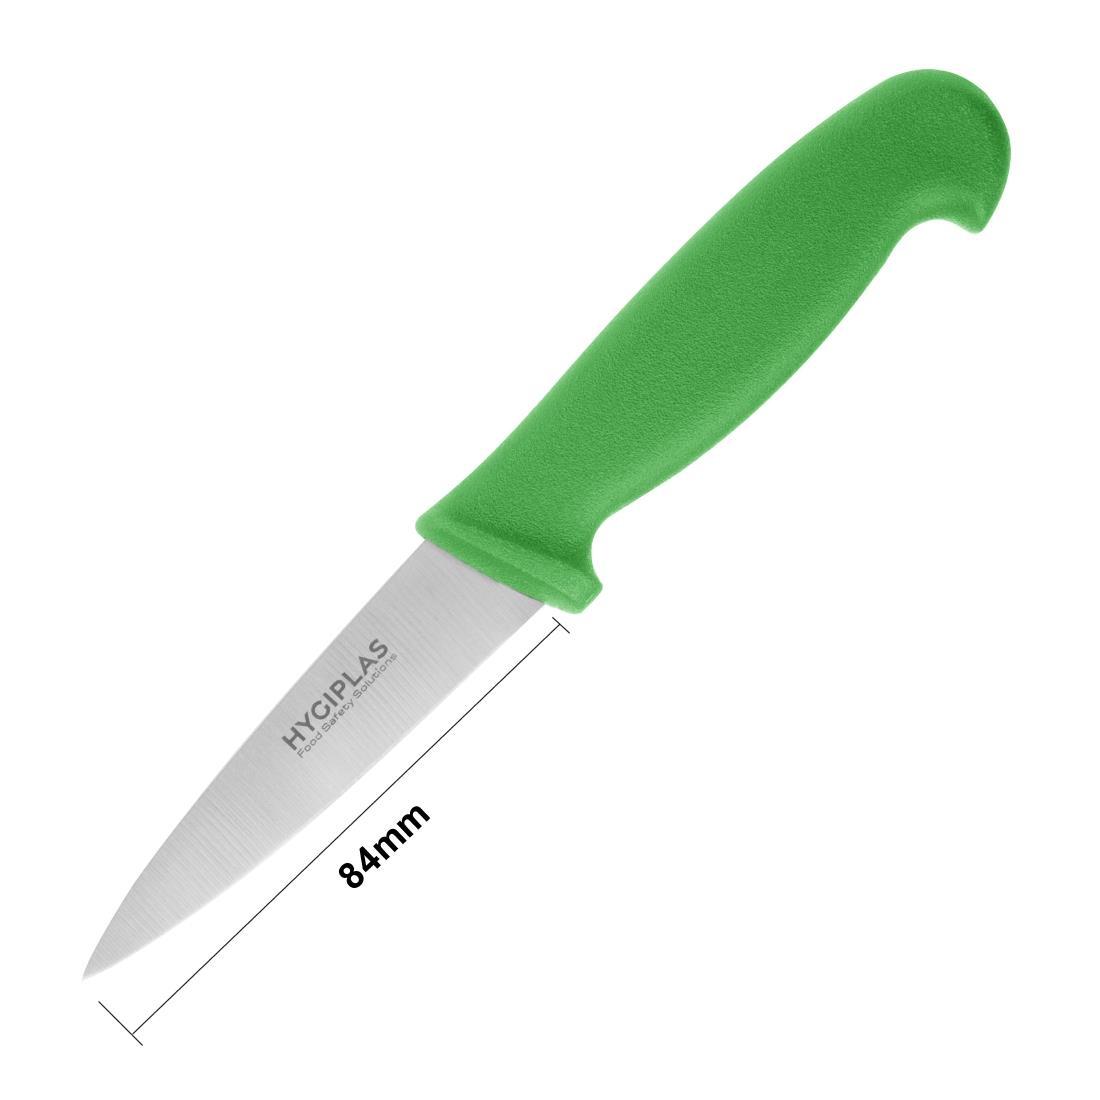 Hygiplas Paring Knife Green 9cm - C866  - 5